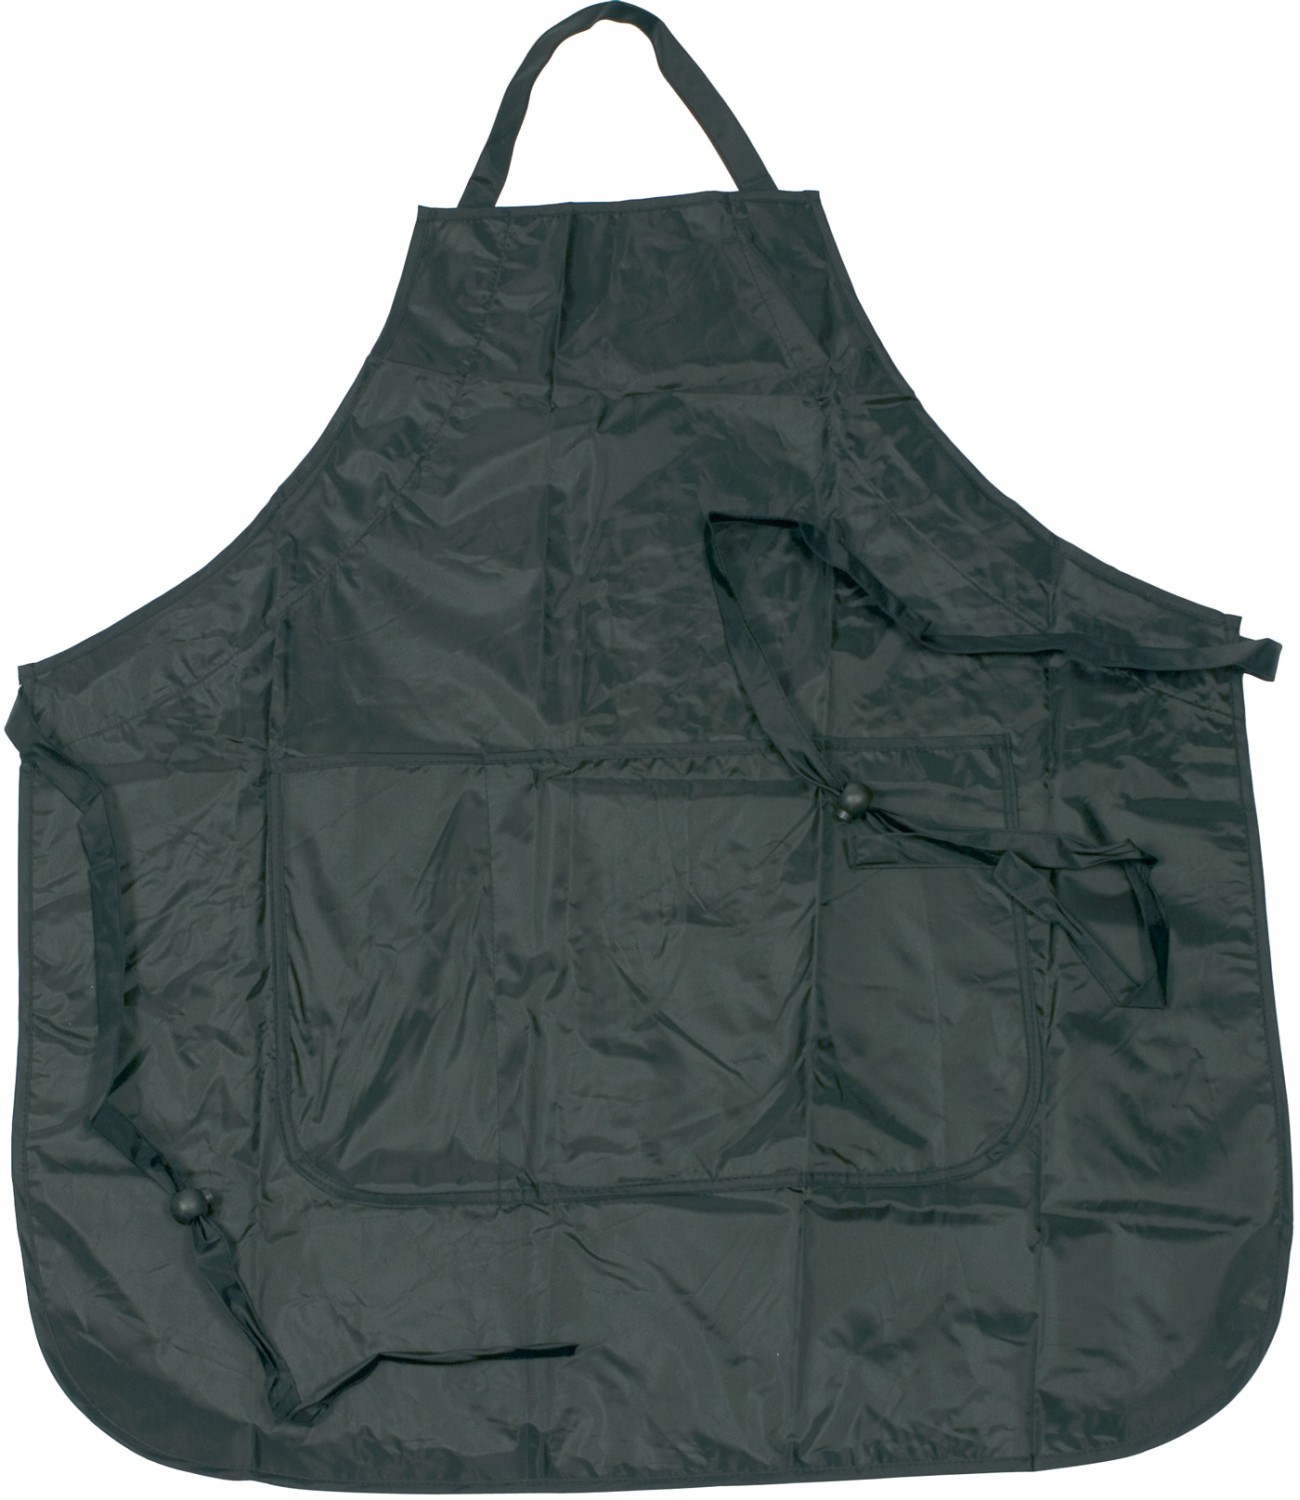  Comair Dyeing apron black 